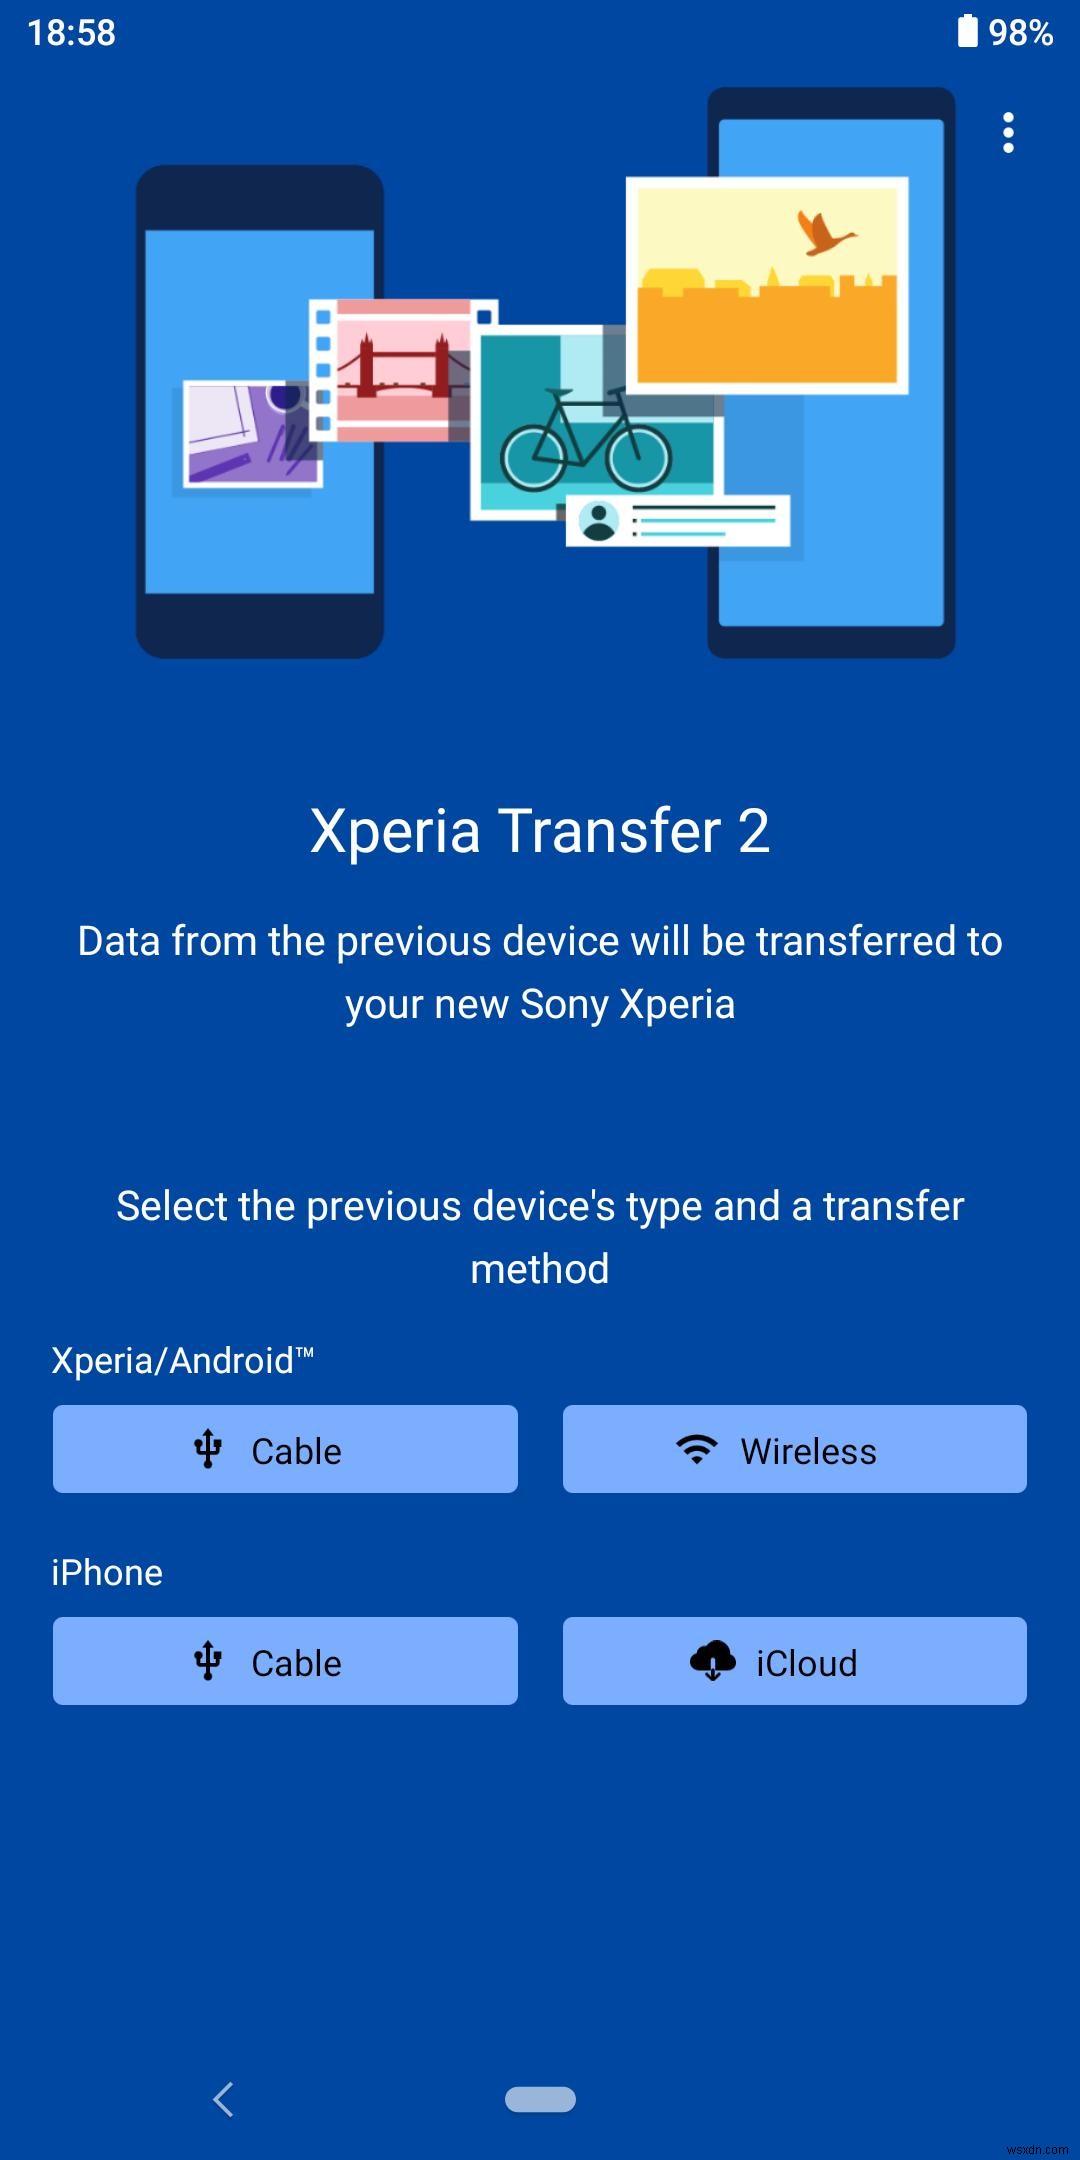 Sony Xperia로 데이터를 전송하는 방법은 무엇입니까? 